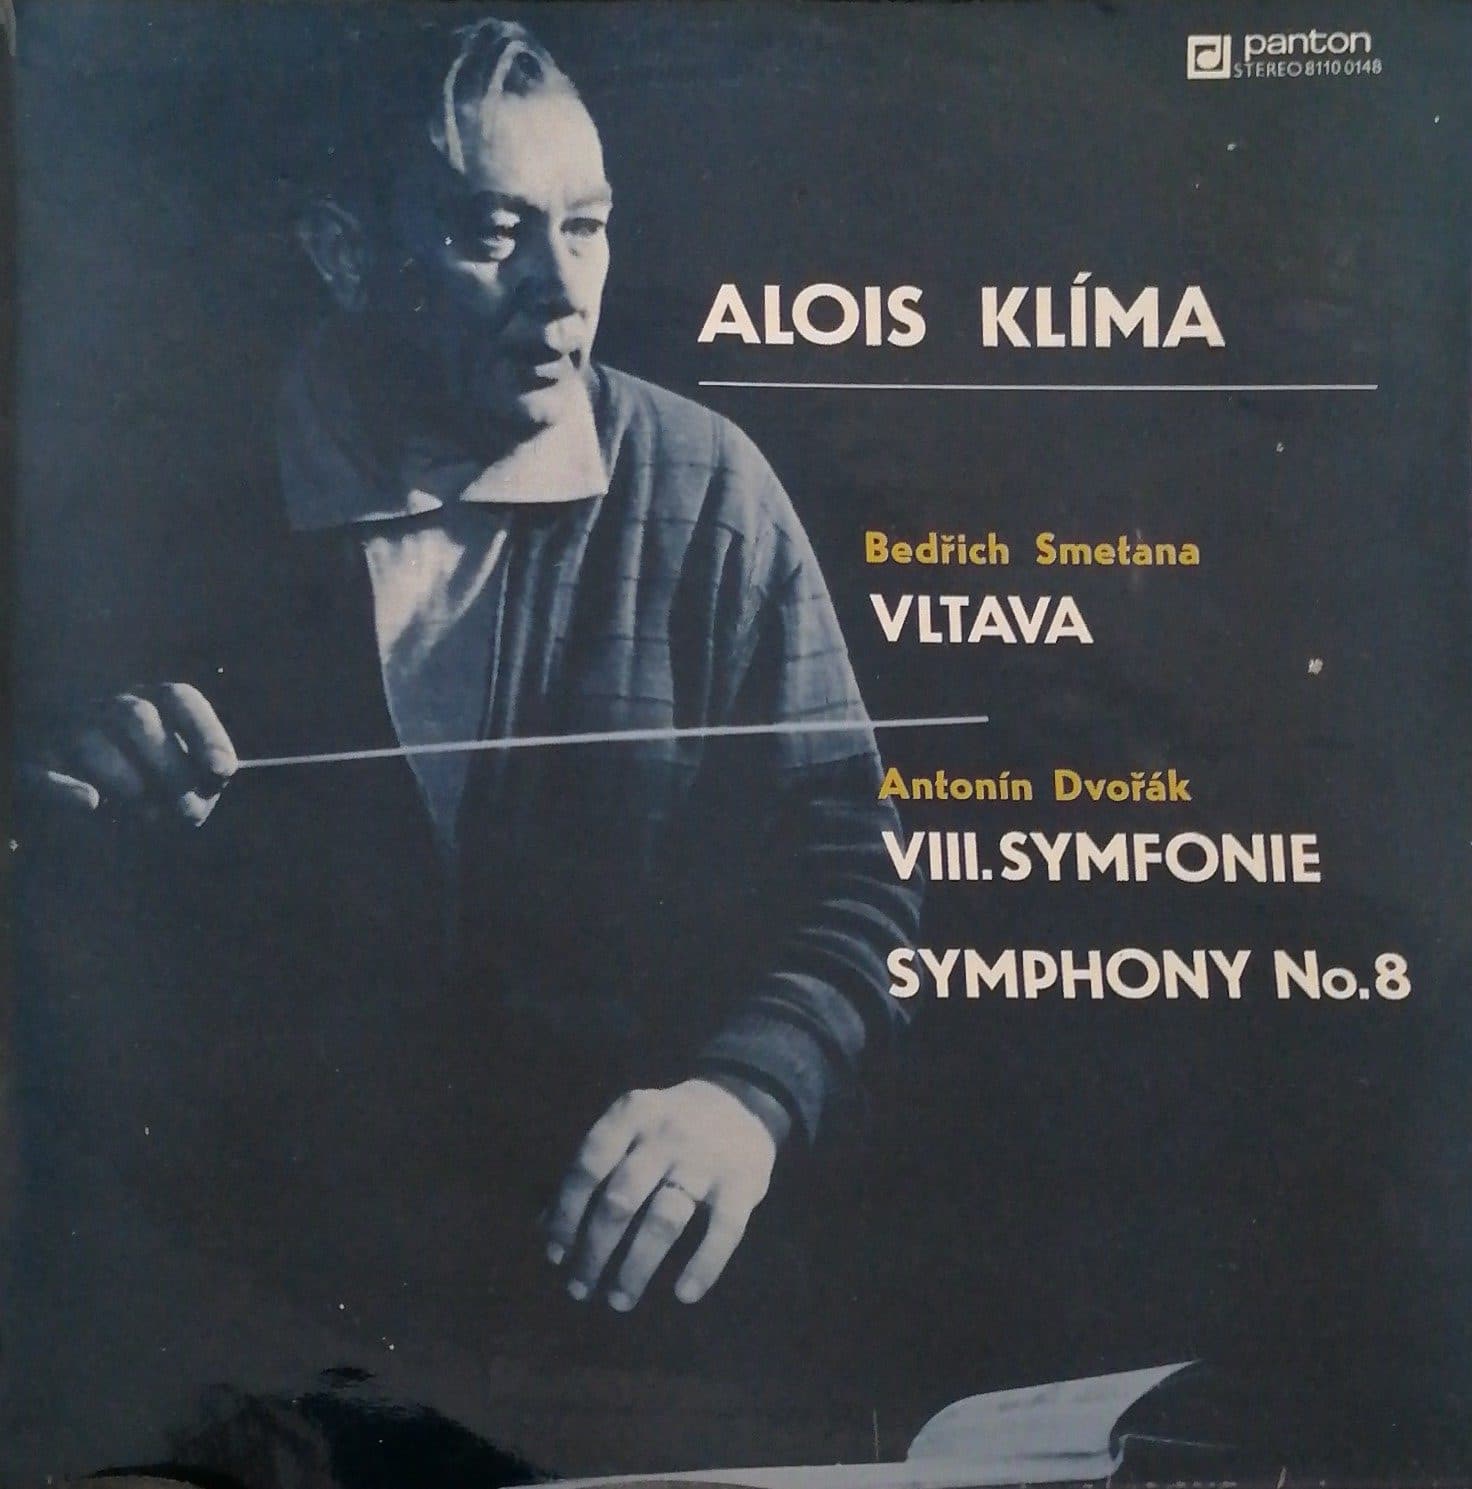 Gramofonska ploča Vltava / VIII. Symfonie (Symphony No.8) Alois Klíma / Bedřich Smetana / Antonín Dvořák 8110 0148